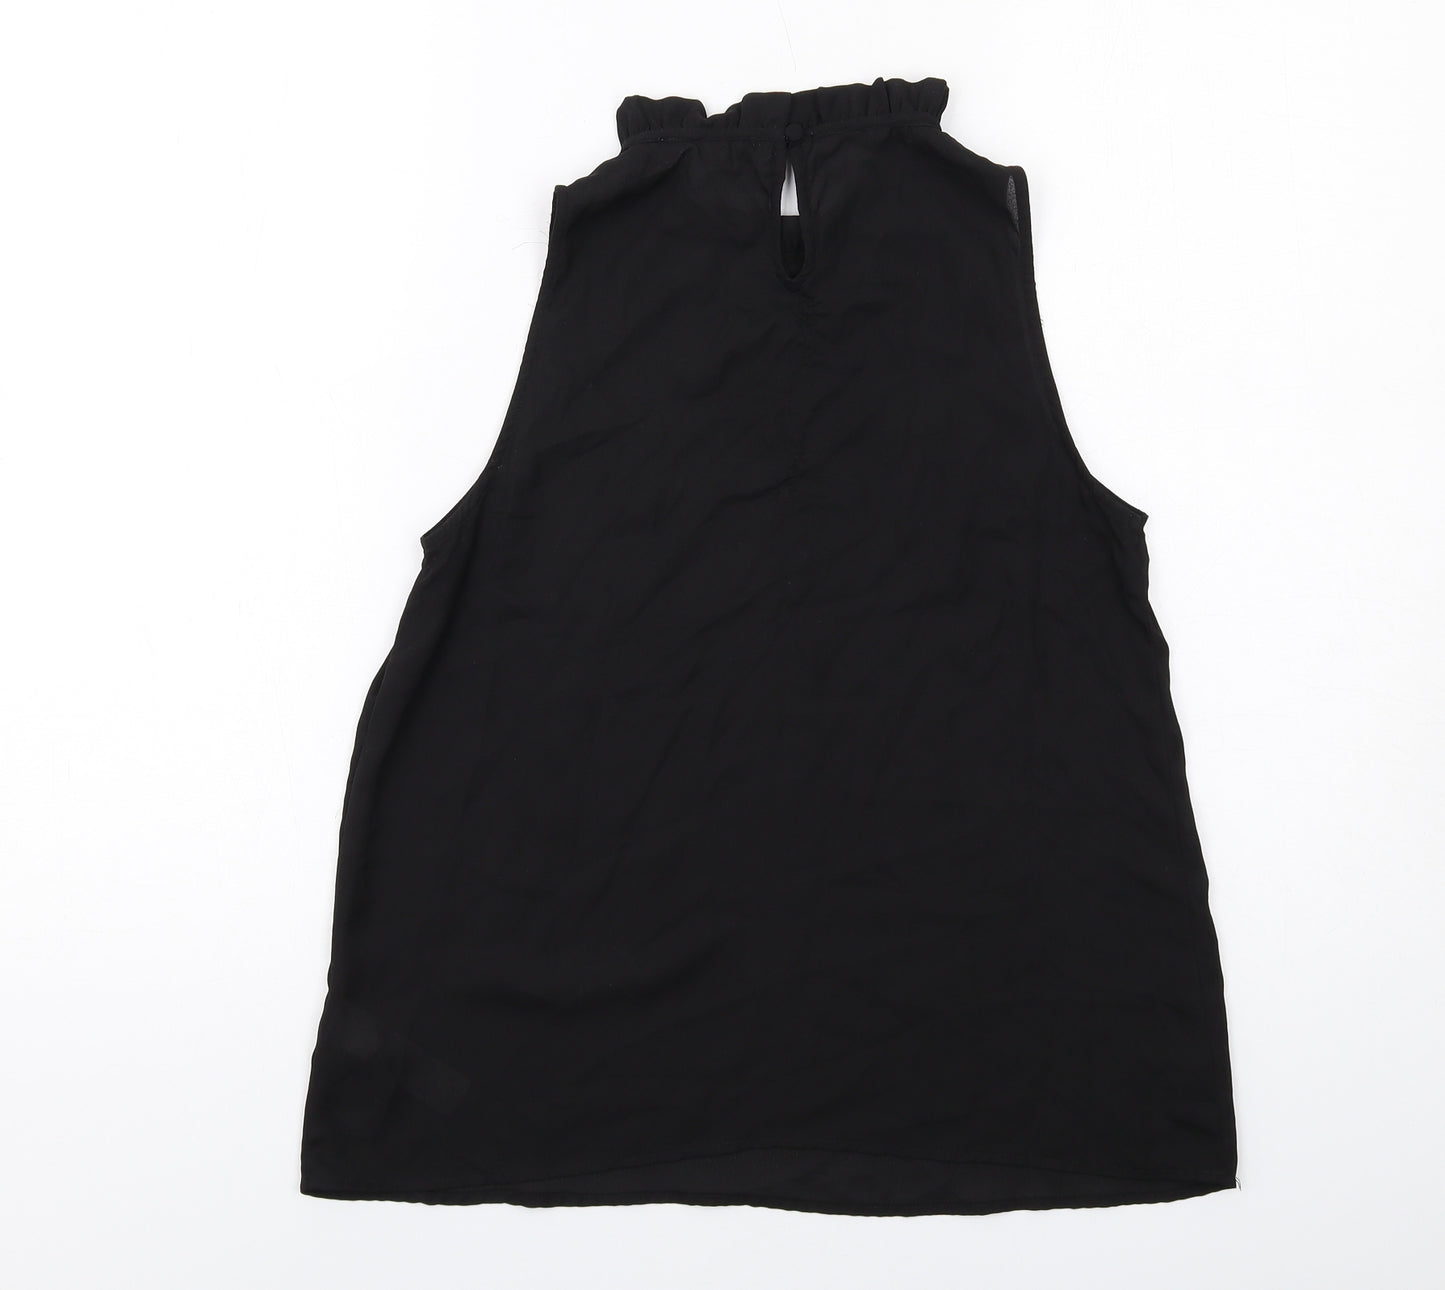 New Look Womens Black Polyester Basic Blouse Size 8 Mock Neck